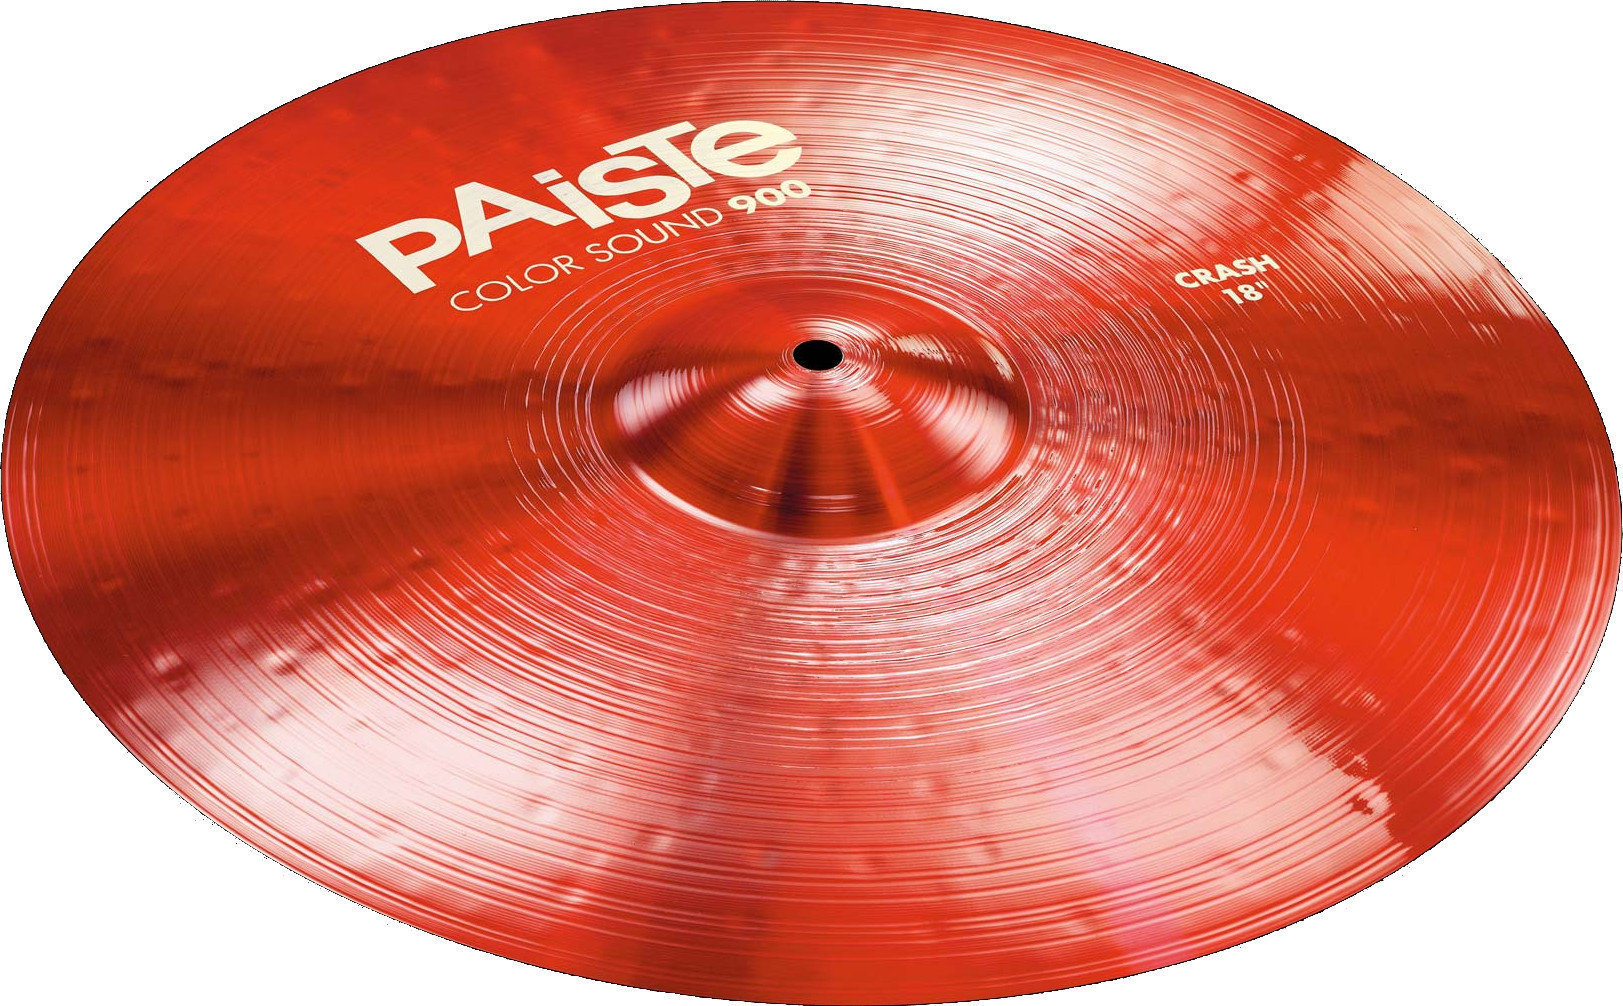 Cymbale crash Paiste Color Sound 900 Cymbale crash 18" Rouge